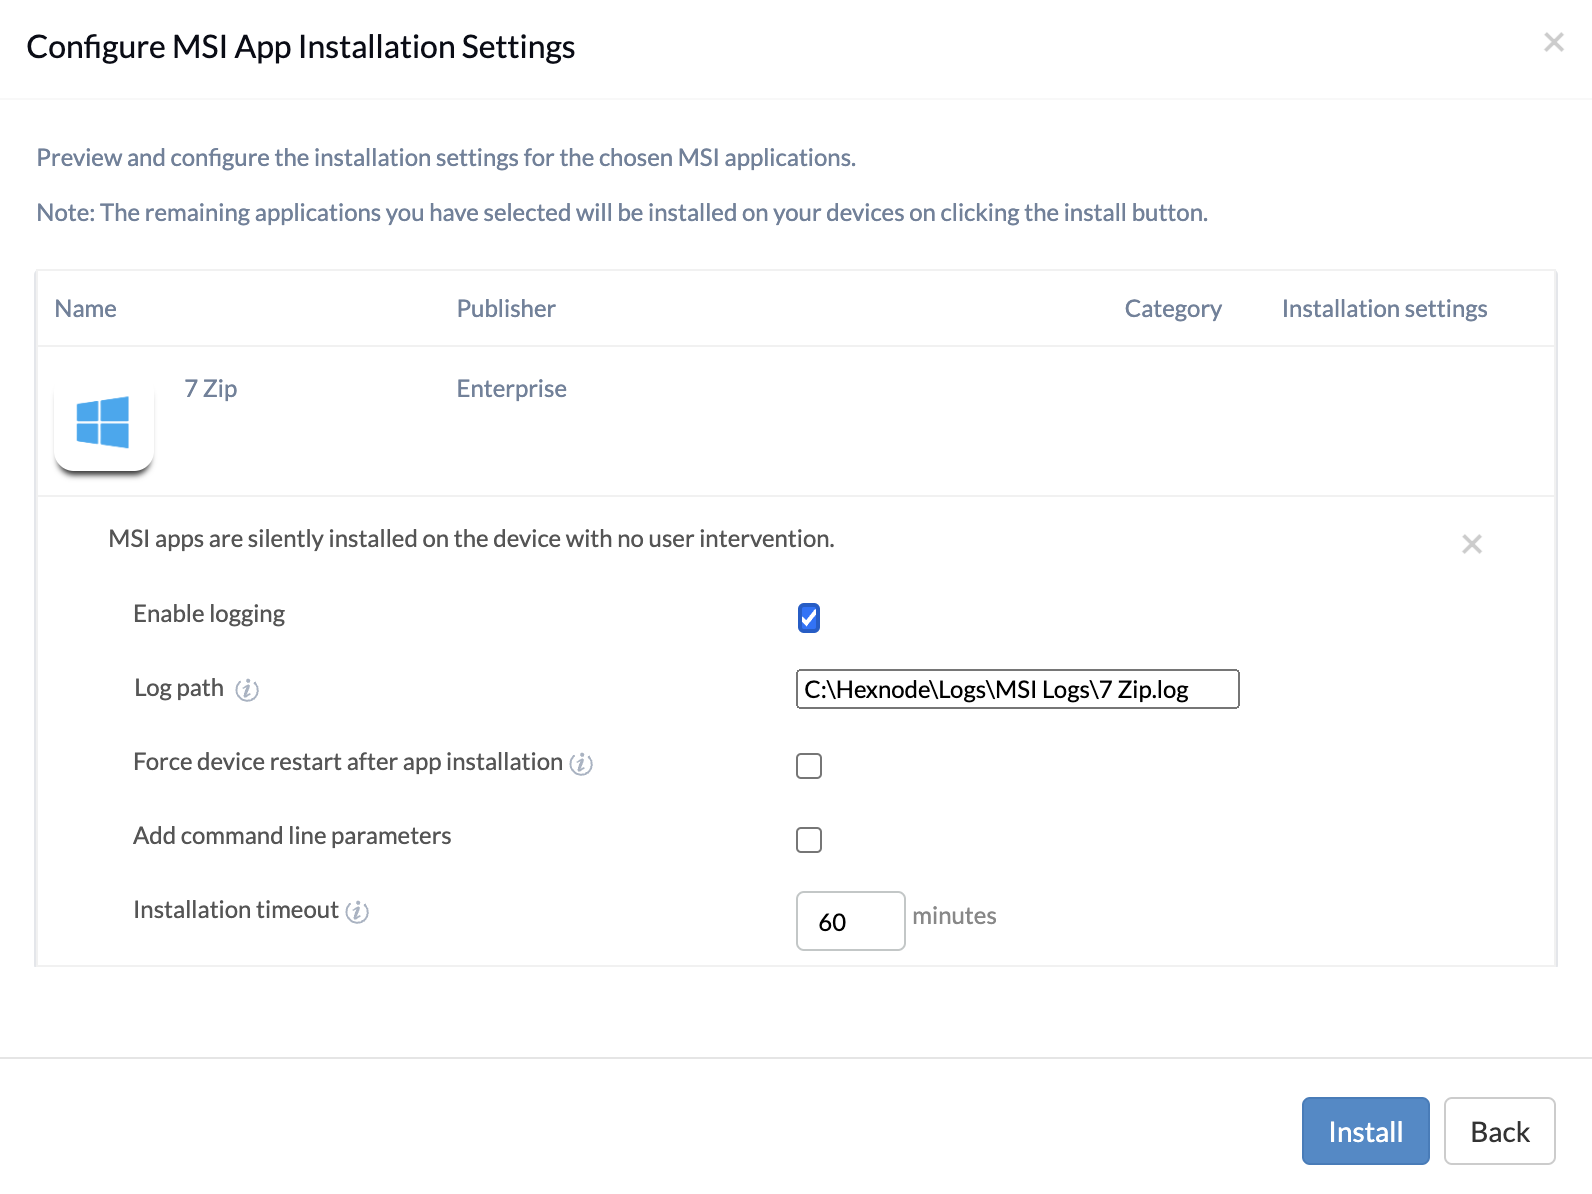 Configure MSI app installation settings